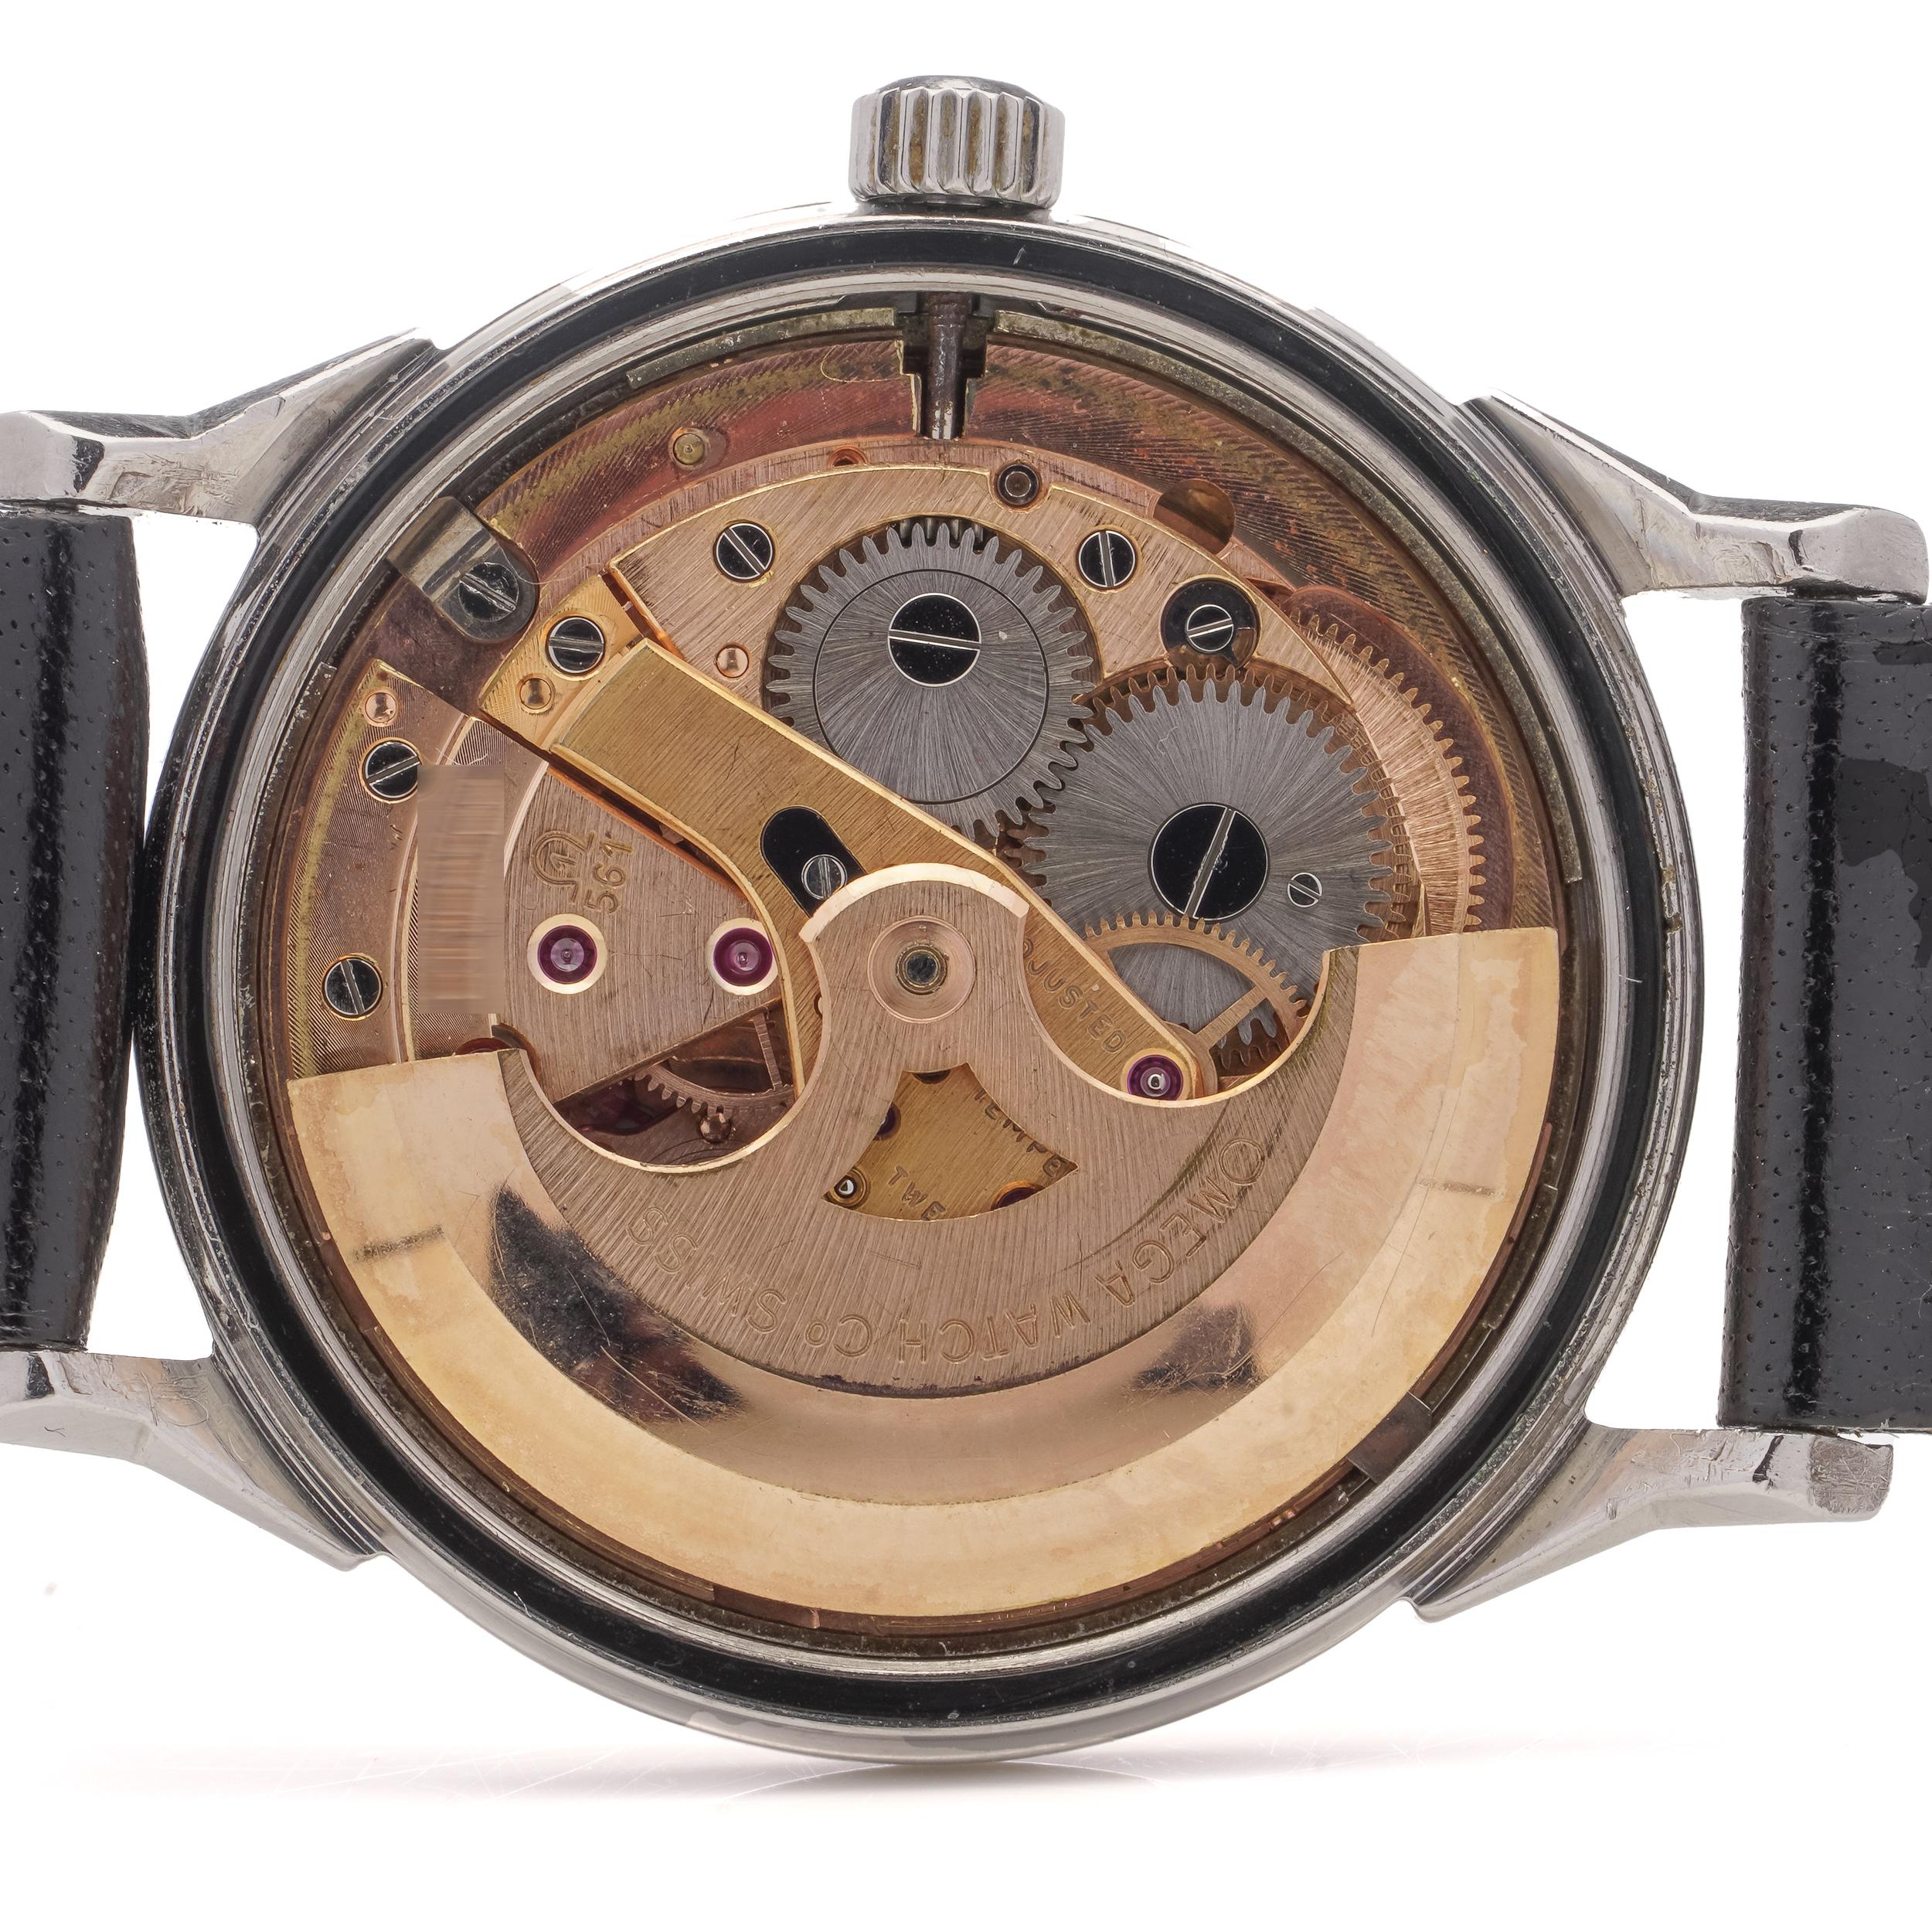 Omega Vintage Constellation Automatic Chronometer men's wristwatch 4